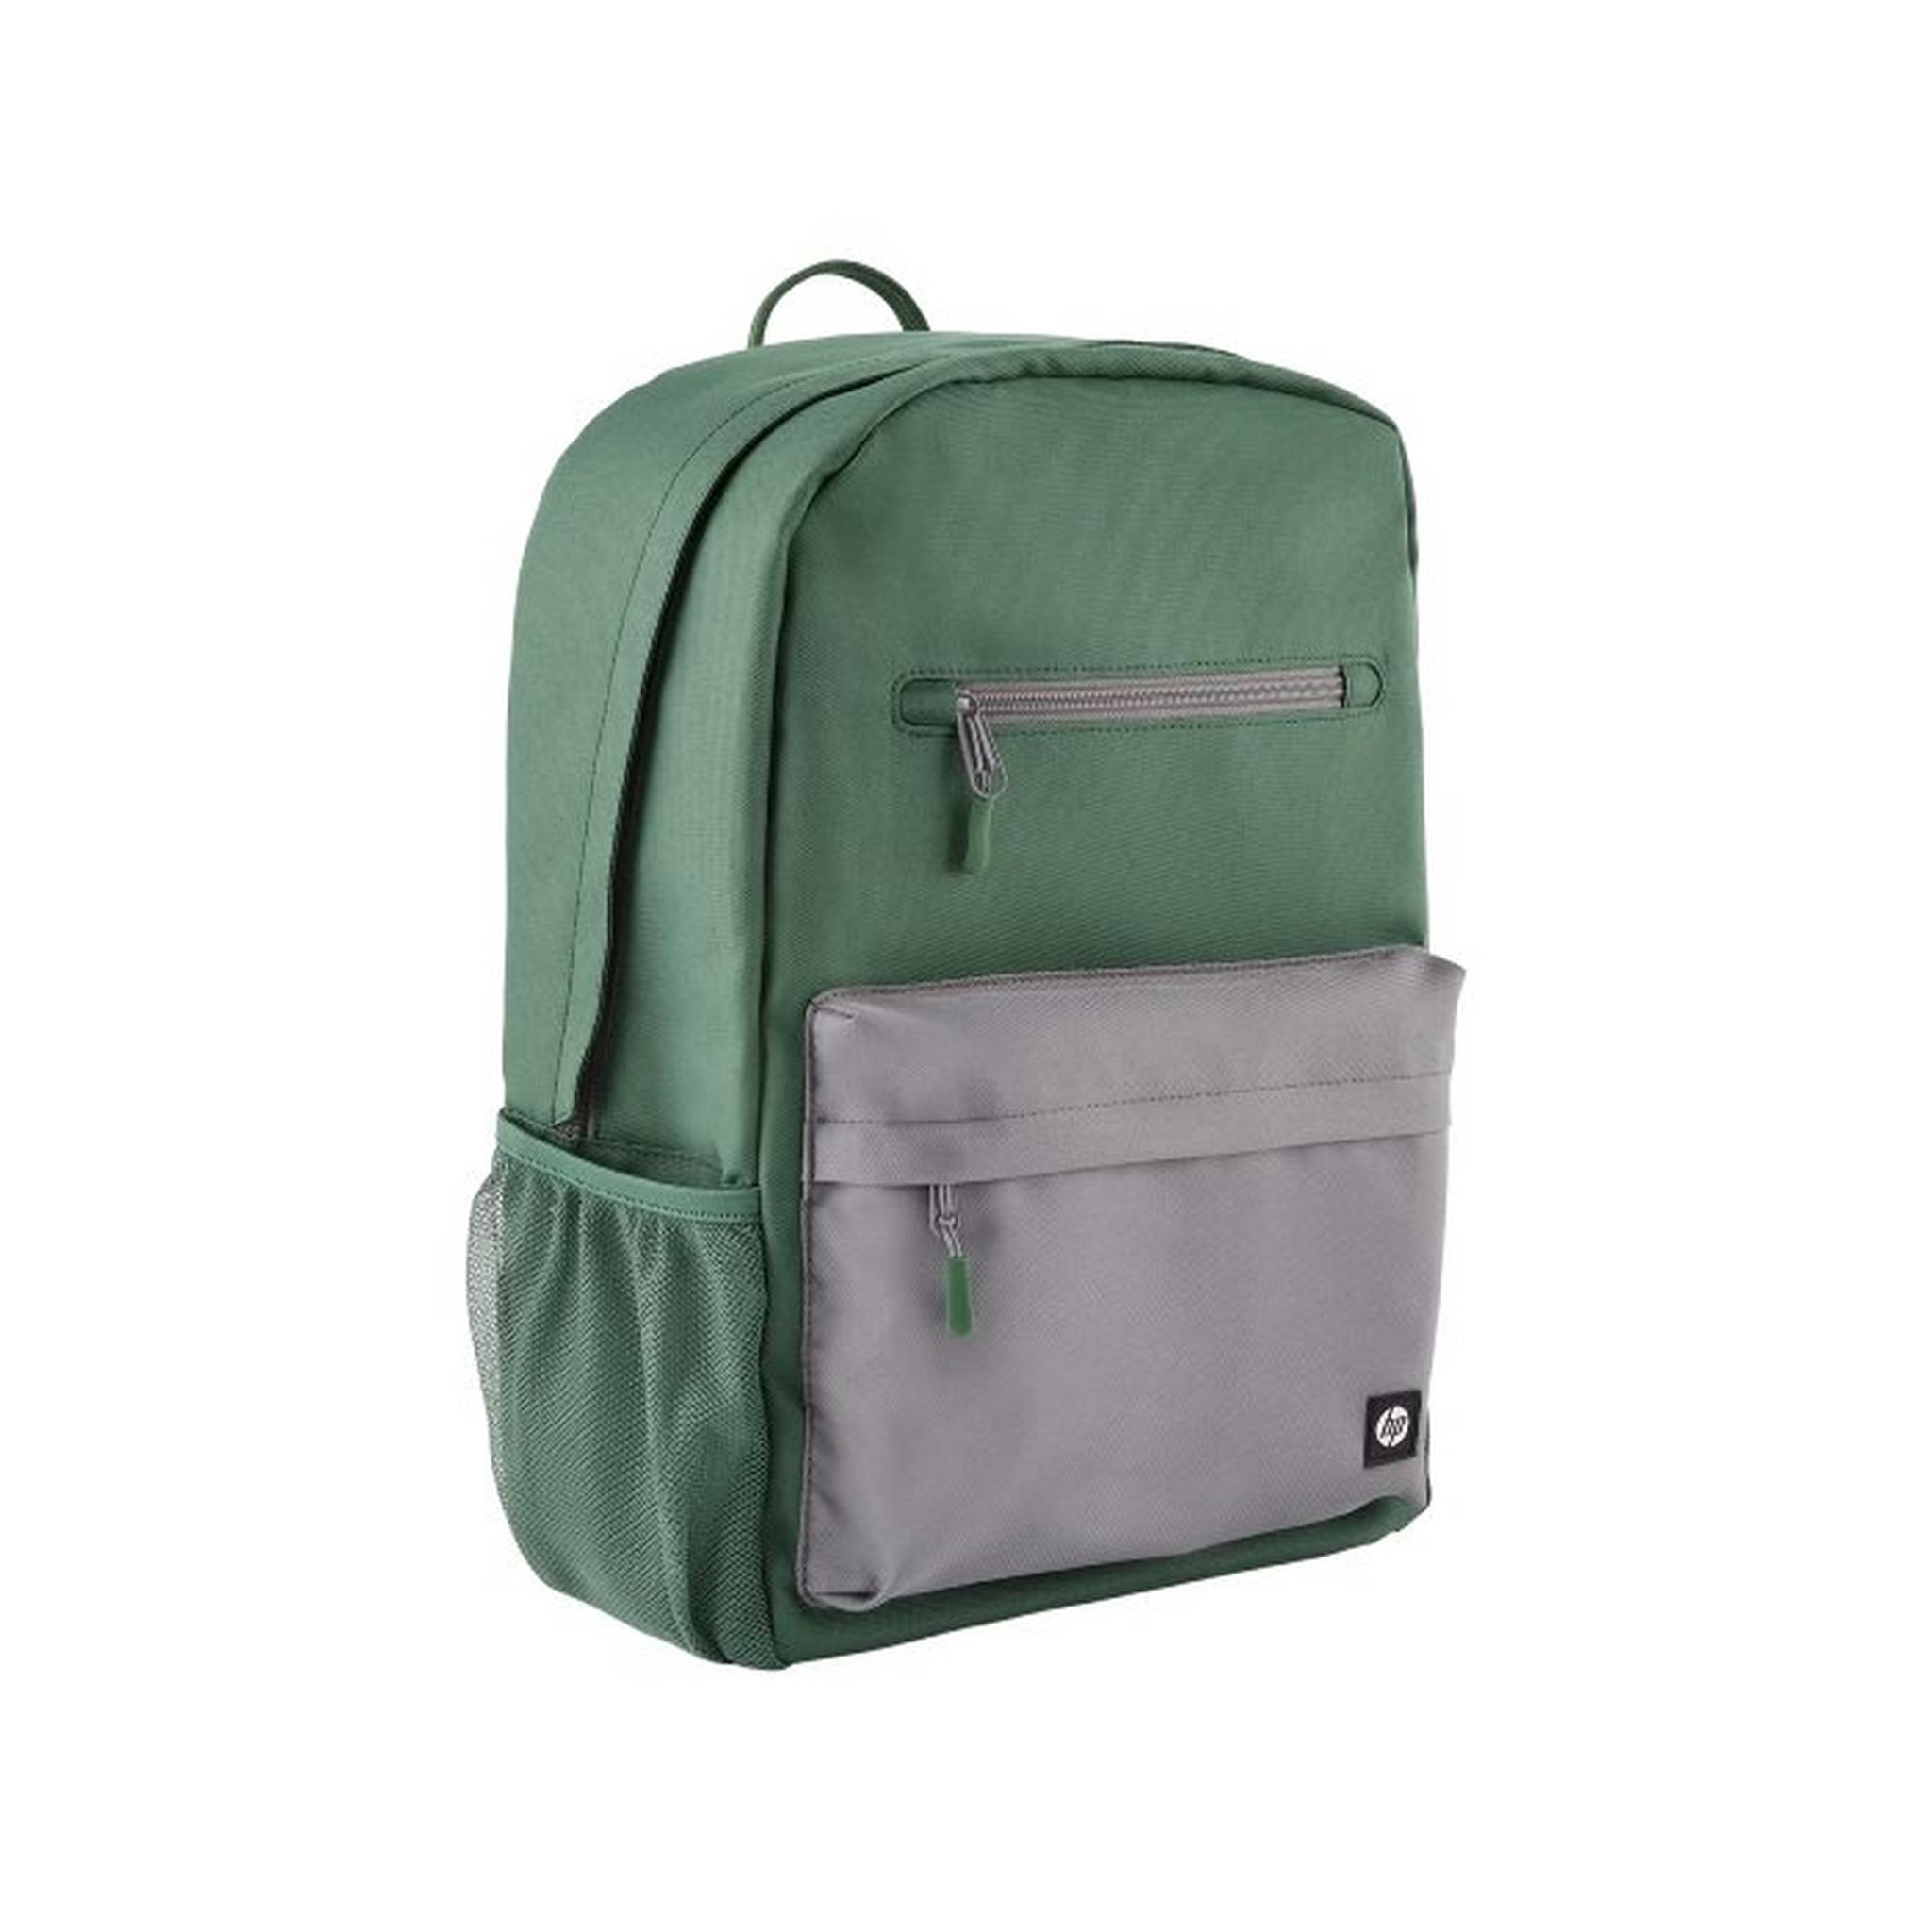 HEWLETT PACKARD Campus 15.6 inch Laptop Backpack, , 7J595AA – Green & Gray